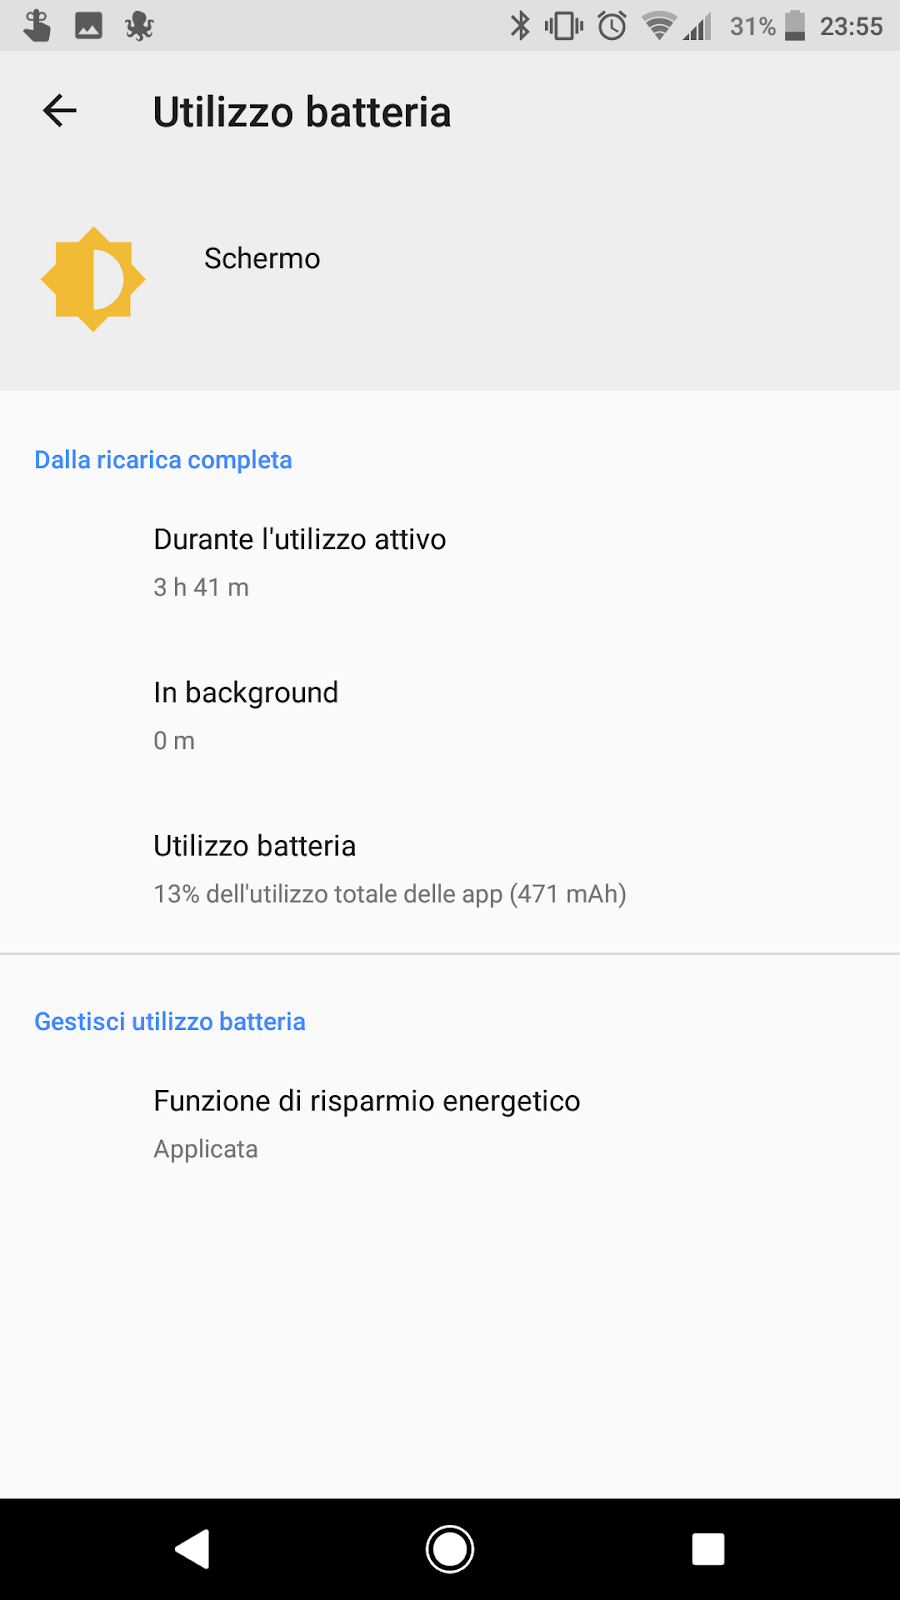 19cad Screenshot 20180717 235501 - Sony Xperia XA2 Ultra - recensione